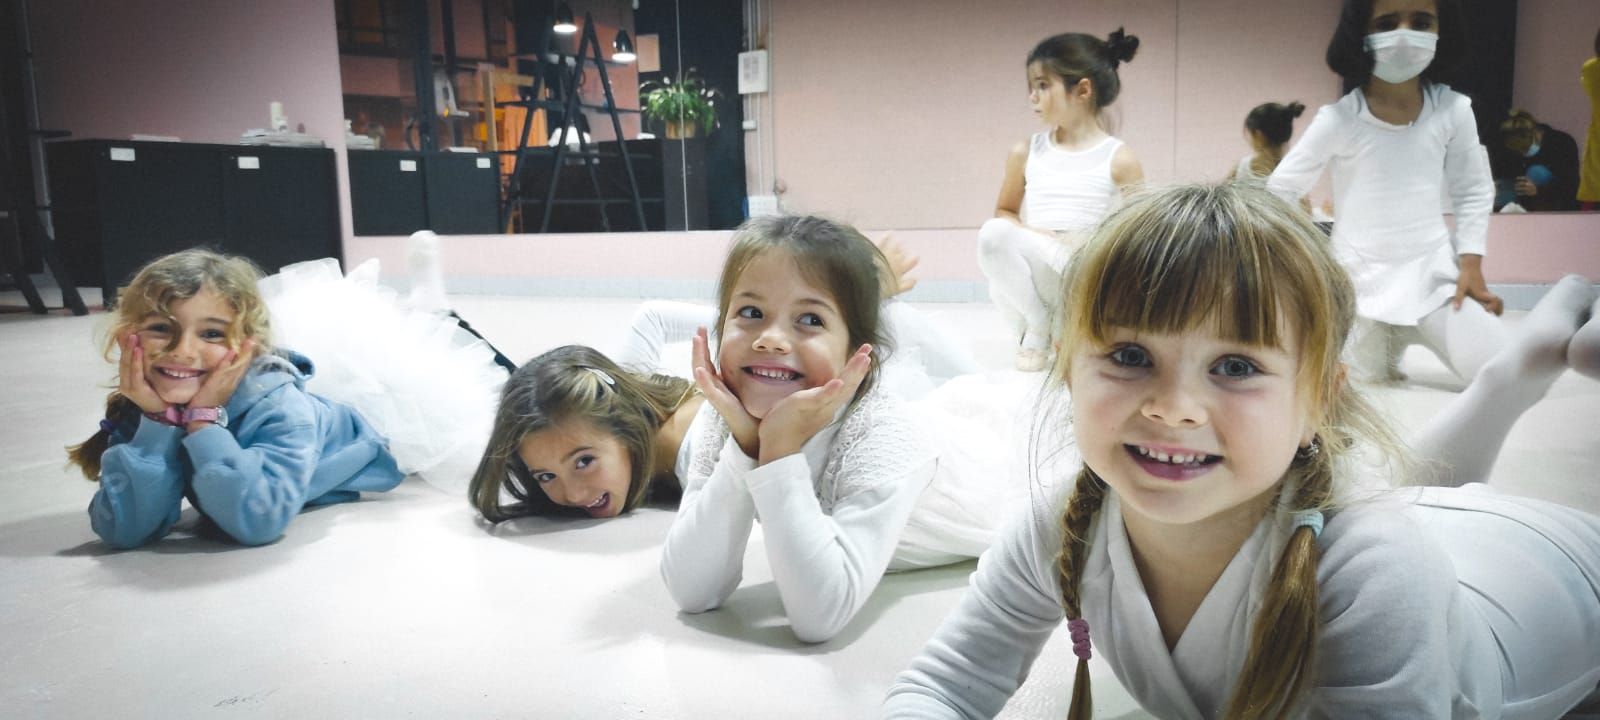 Escuela de danza en Sopelana